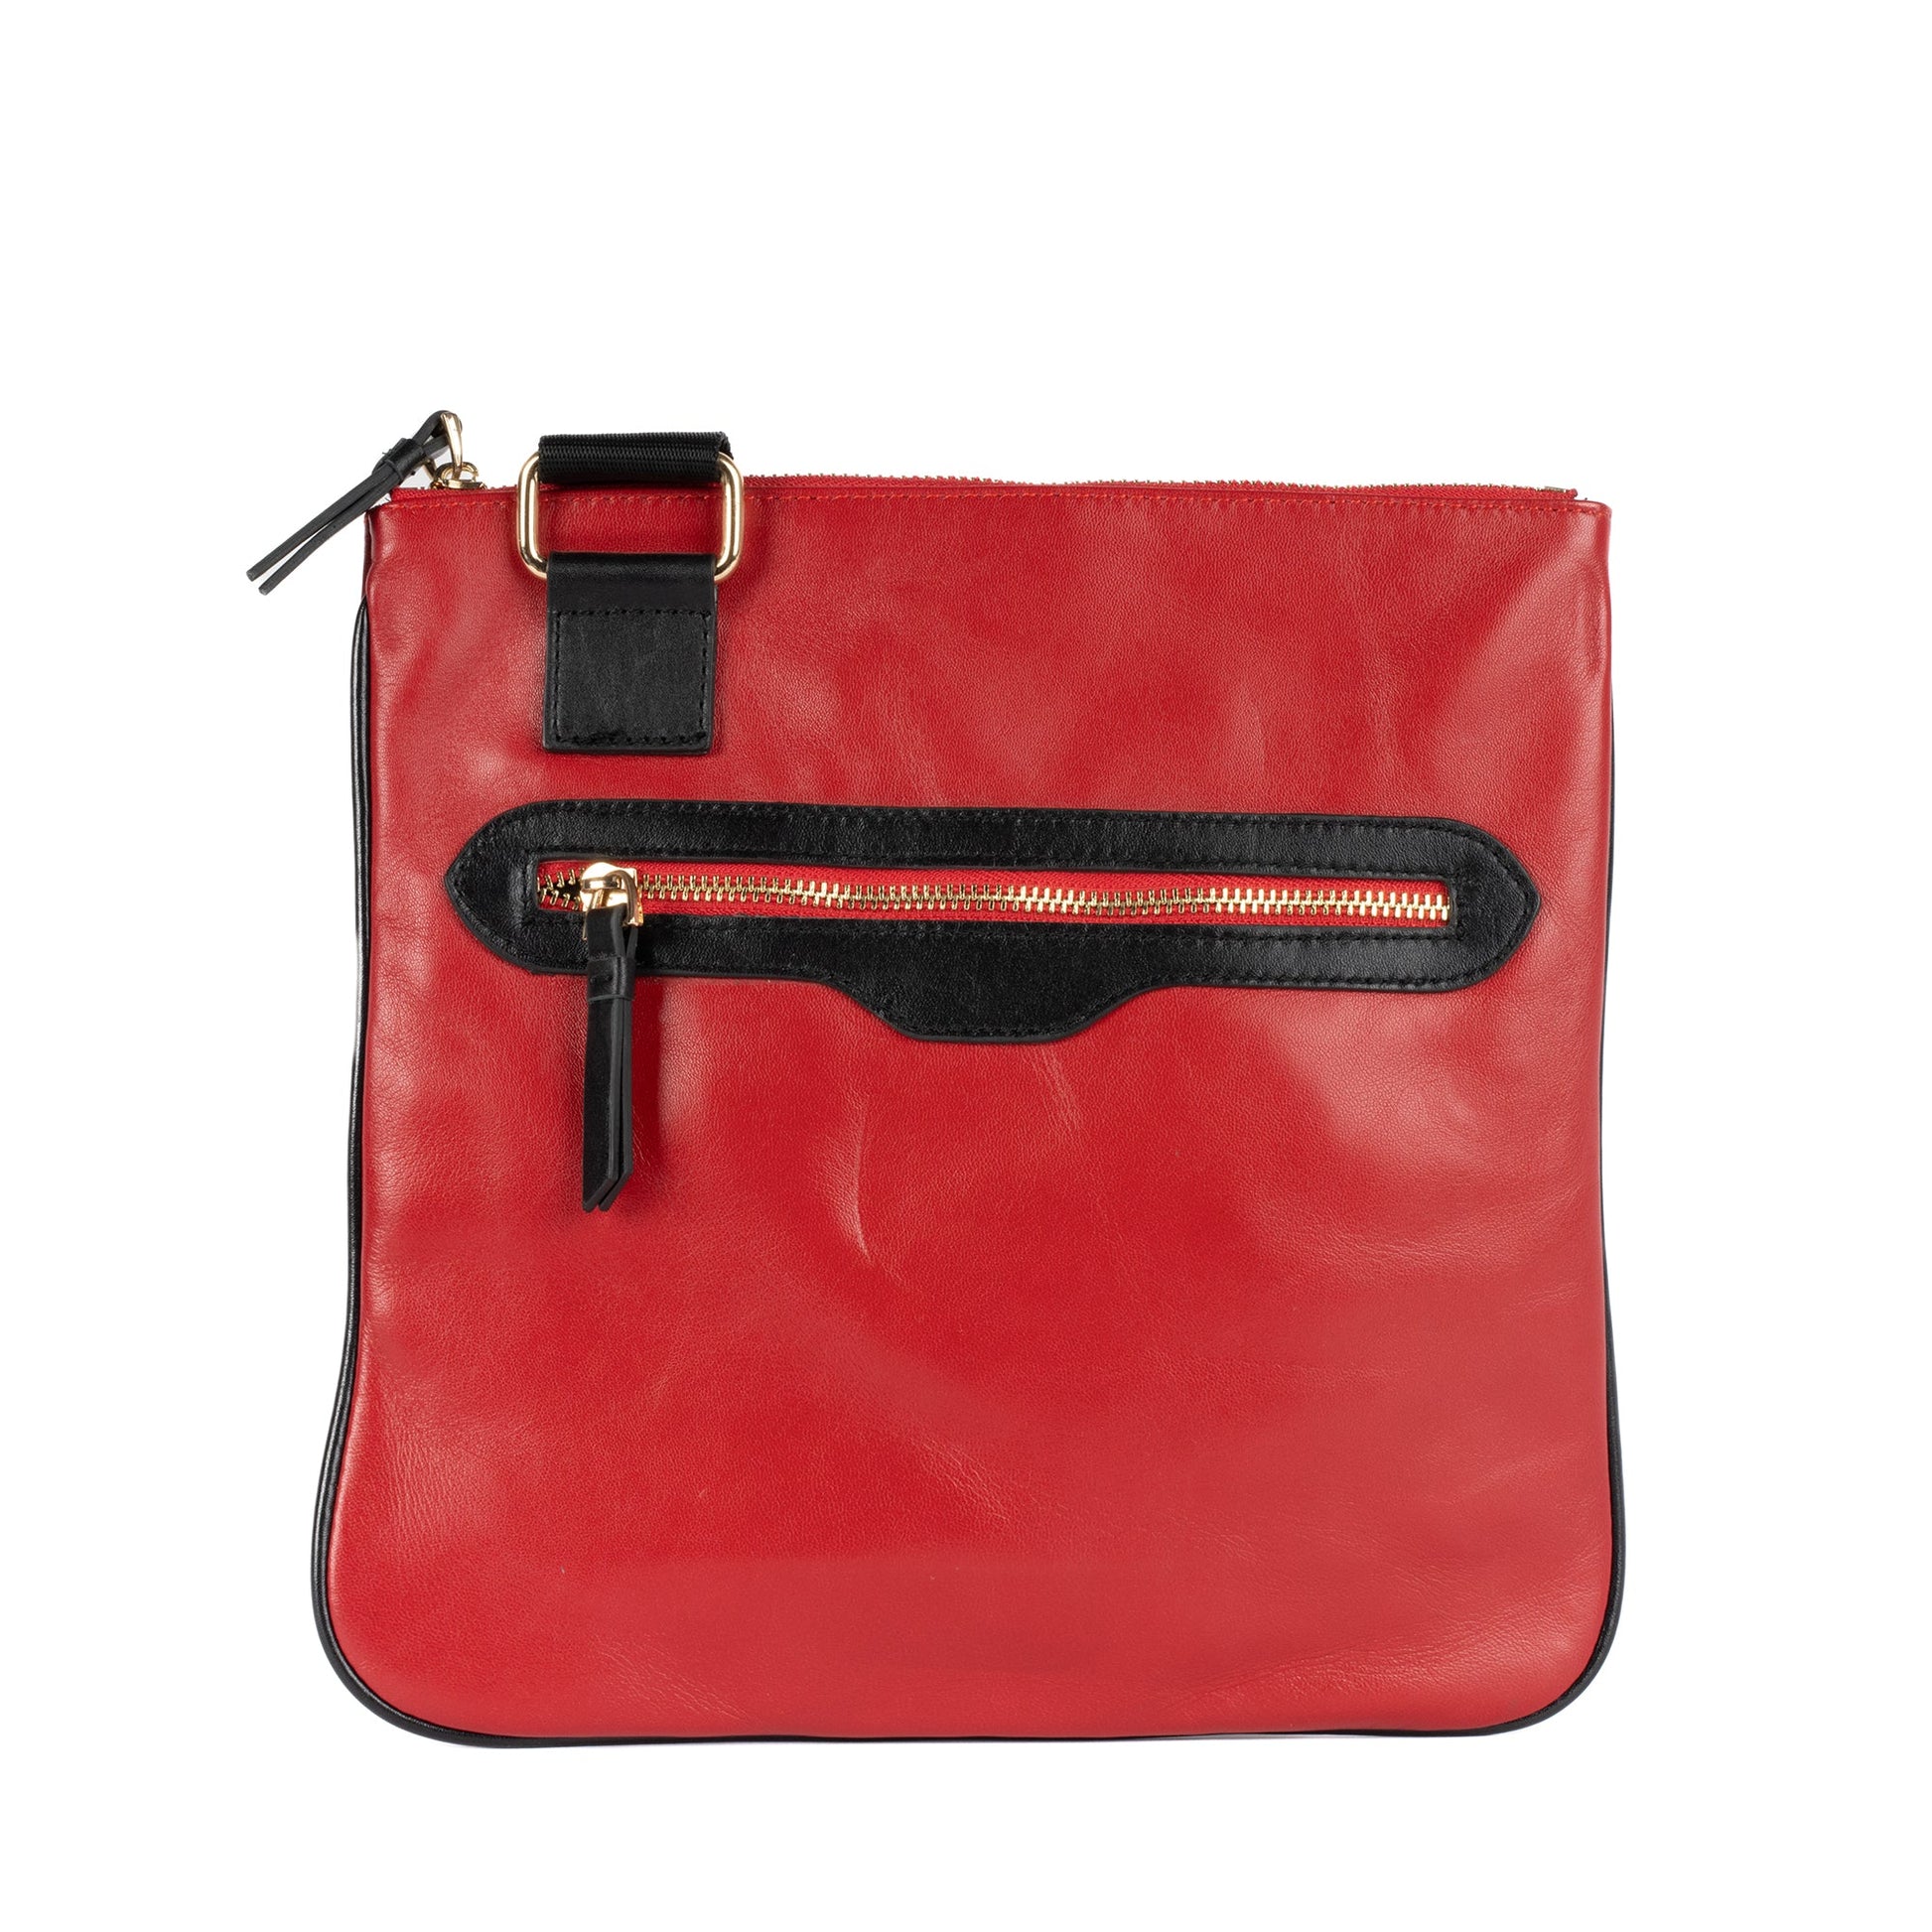 Mira Leather Crossbody Bag - Red - bags Zengoda Shop online from Artisan Brands